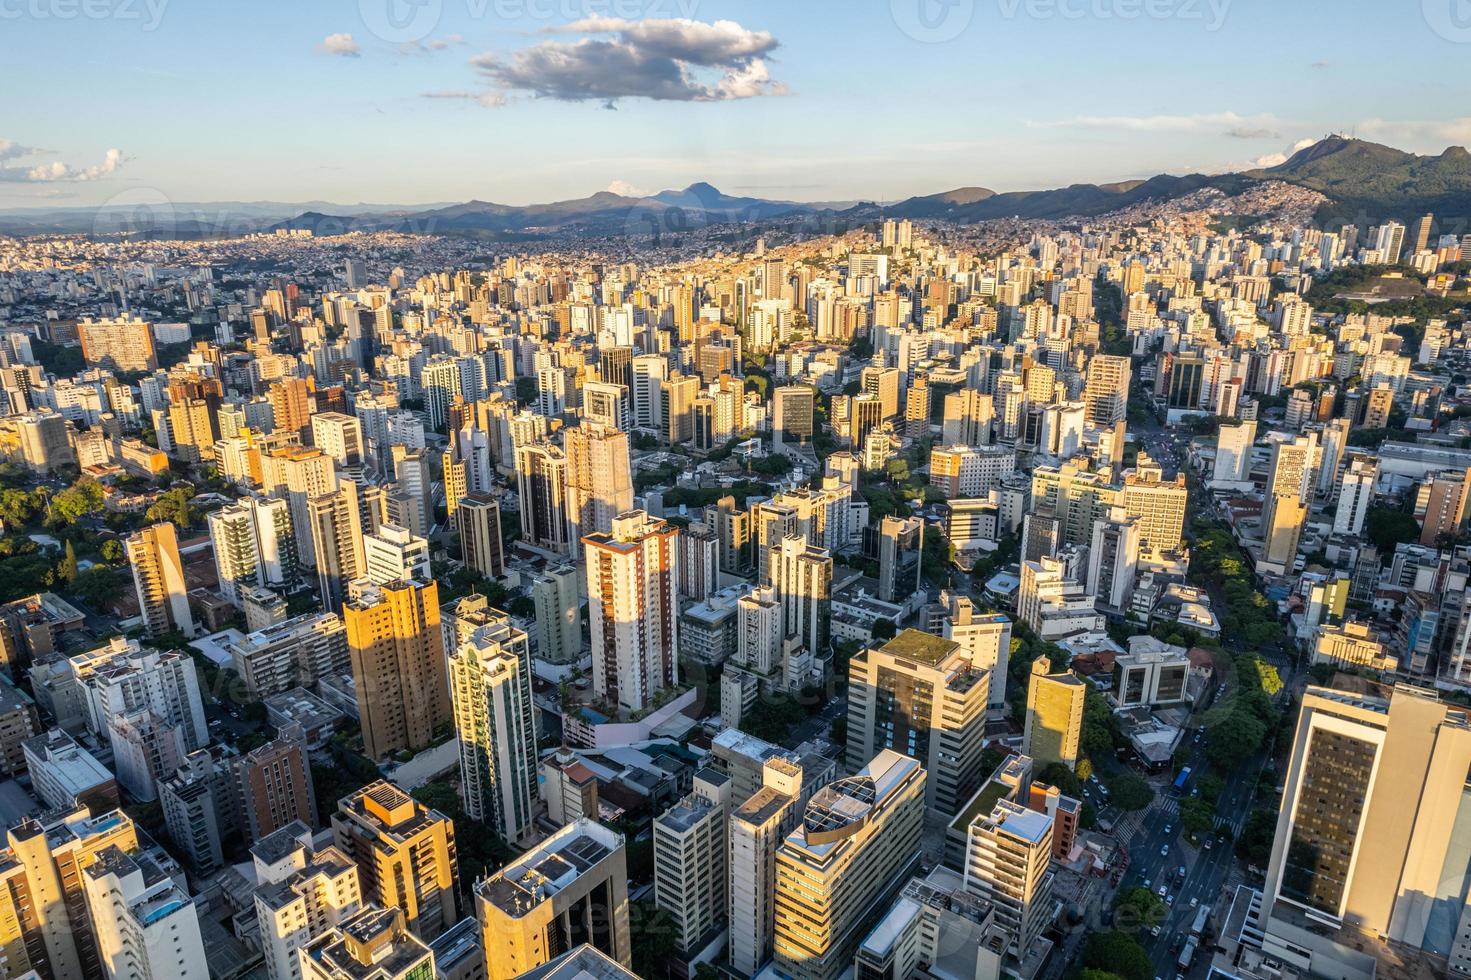 veduta aerea della città di belo horizonte, a minas gerais, brasile. foto